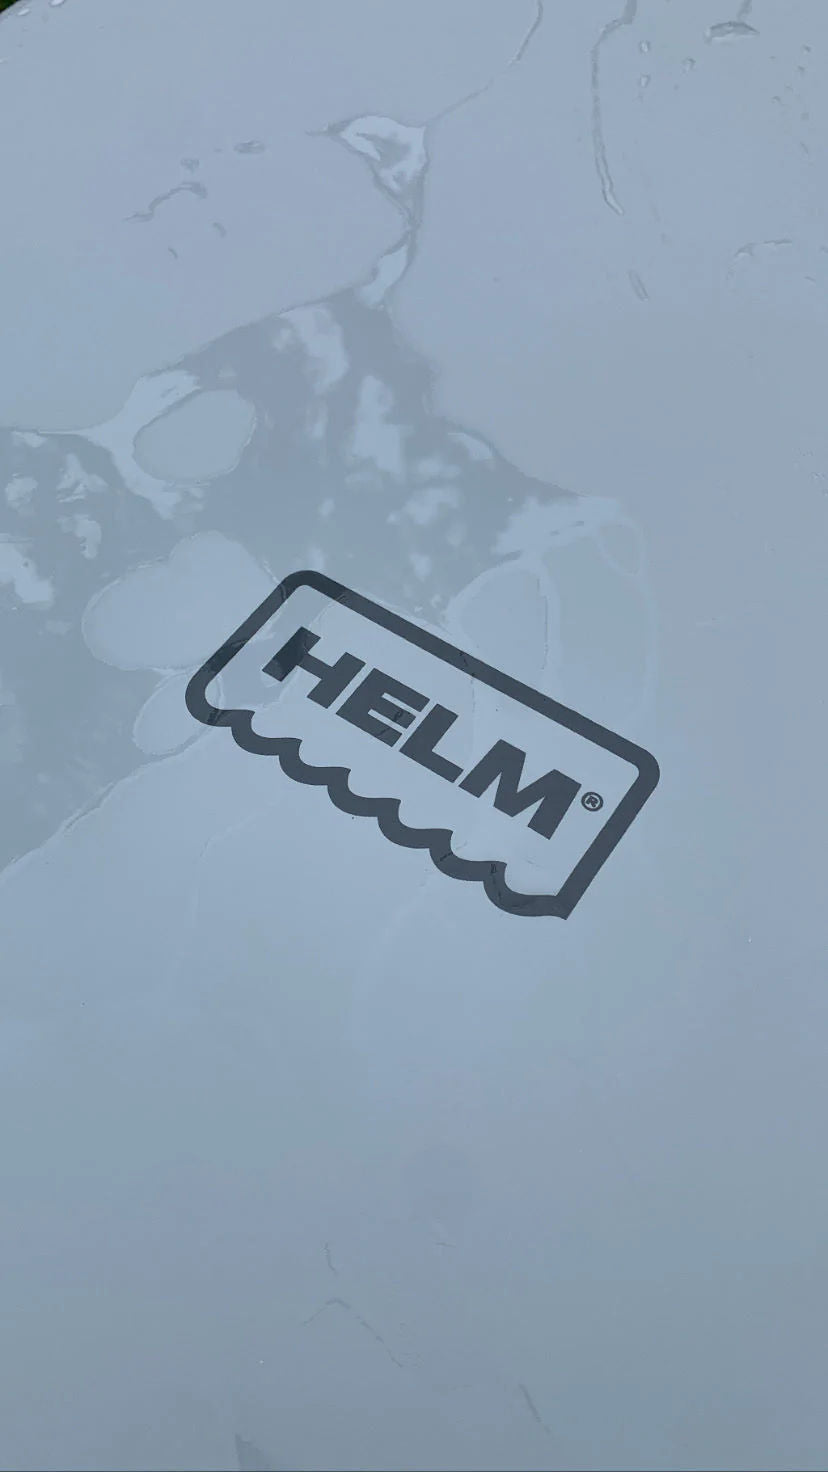 Helm Supplies | PERFORMANCE FISH - PISTACCIO - Surf Bored